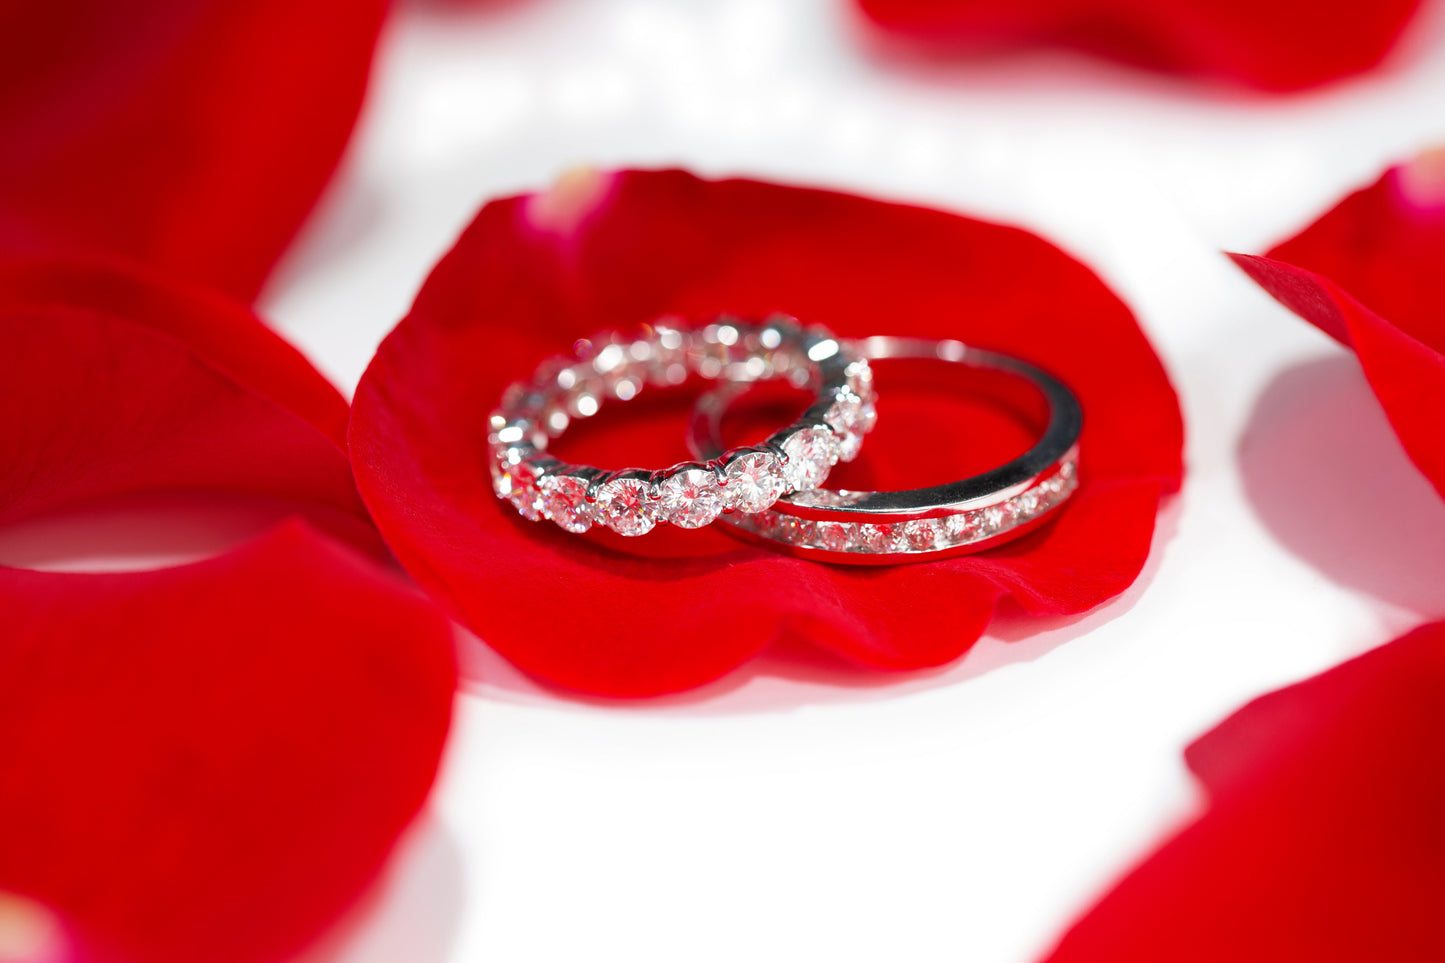 Alianza de boda con canal de diamantes para hombre en oro blanco de 18 quilates